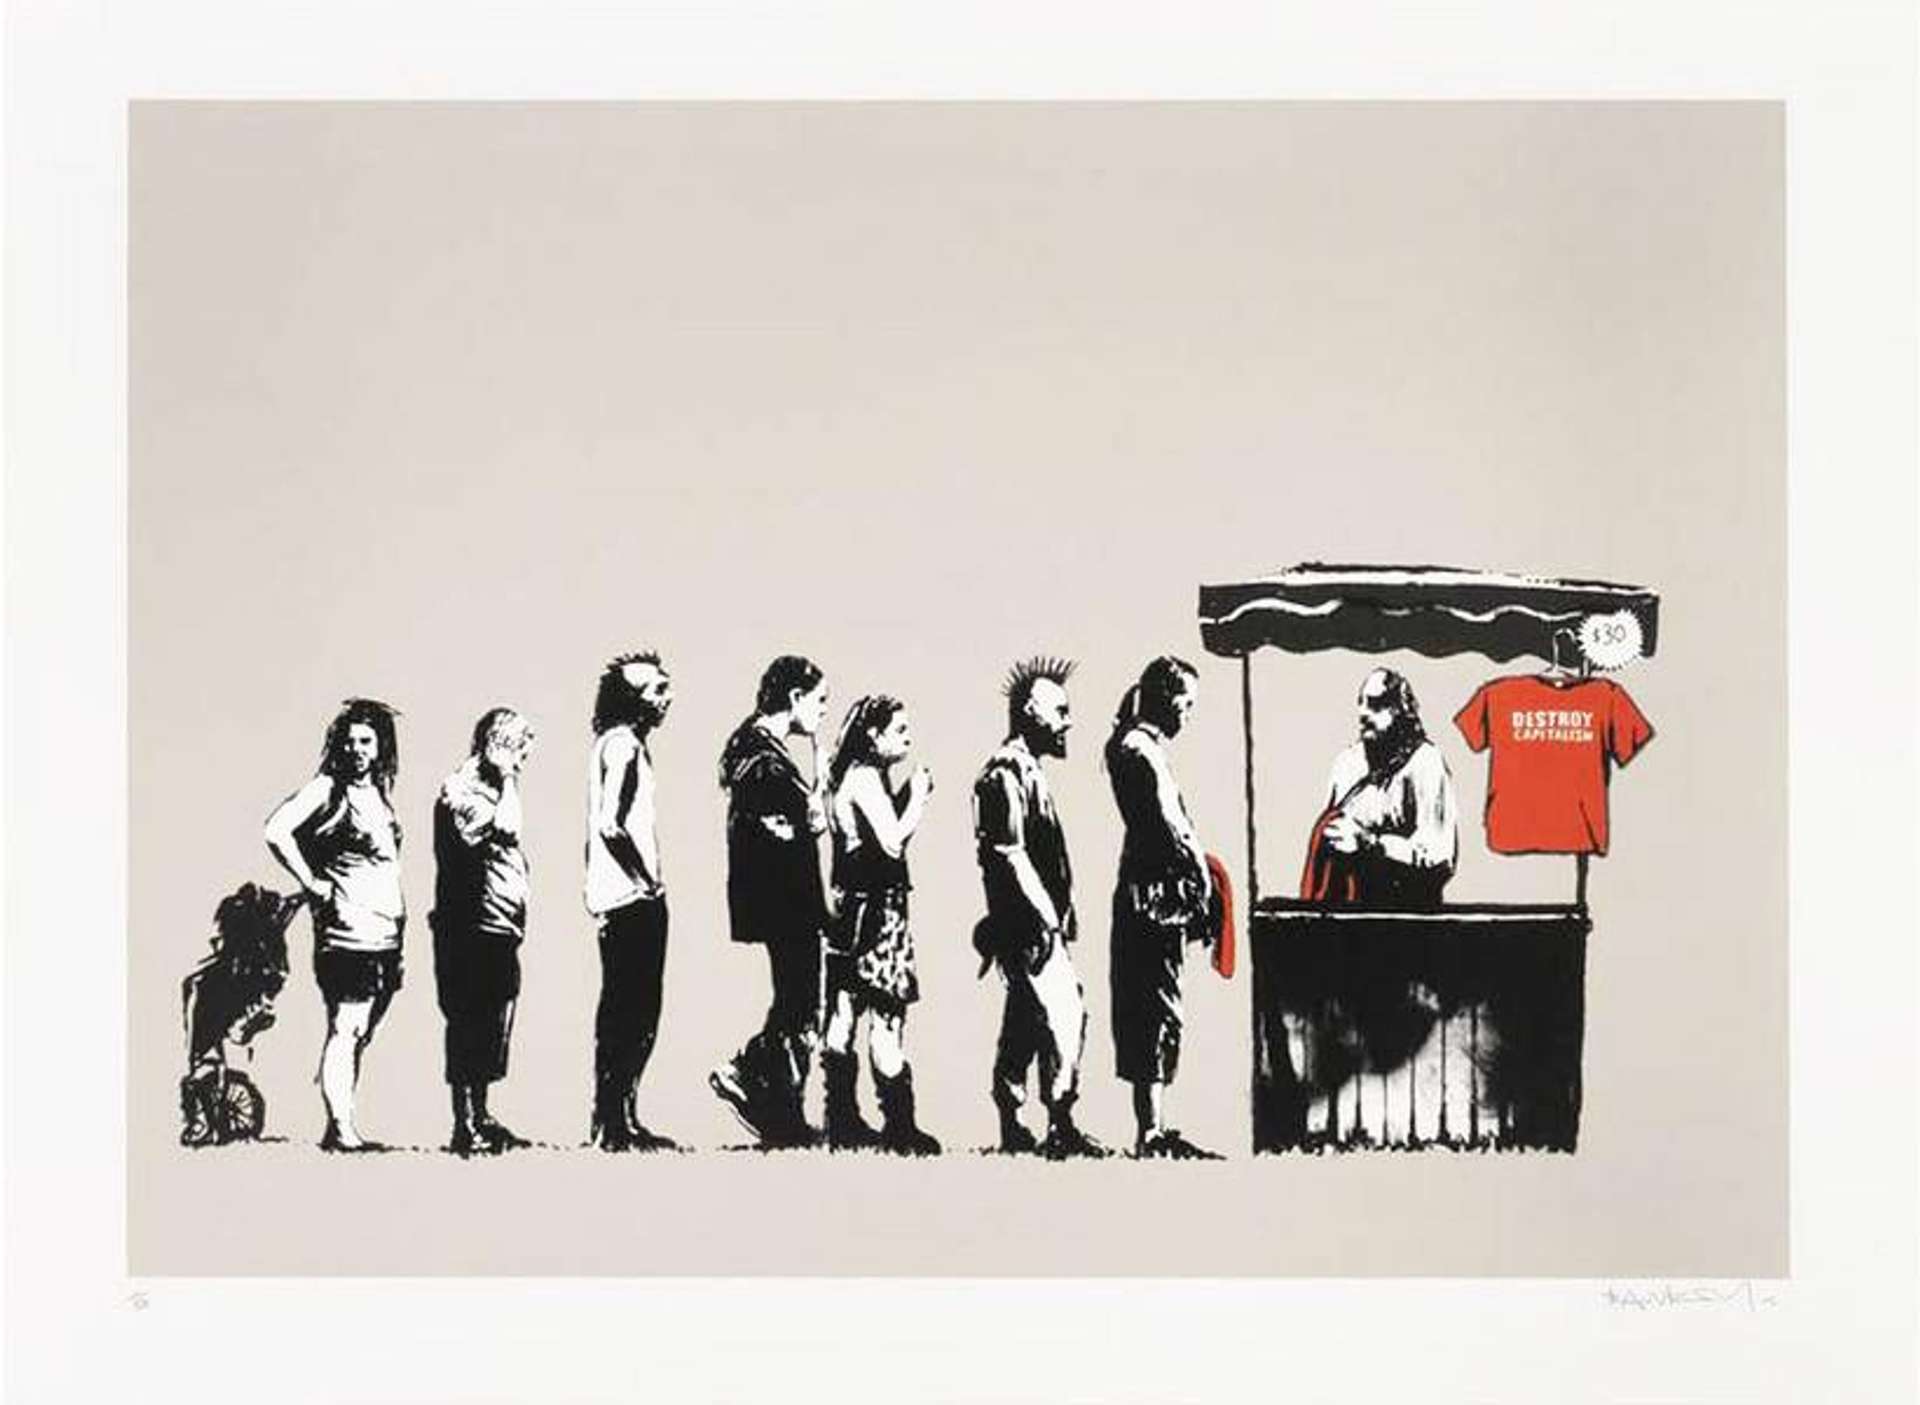 Banksy: Festival (Destroy Capitalism) - Unsigned Print